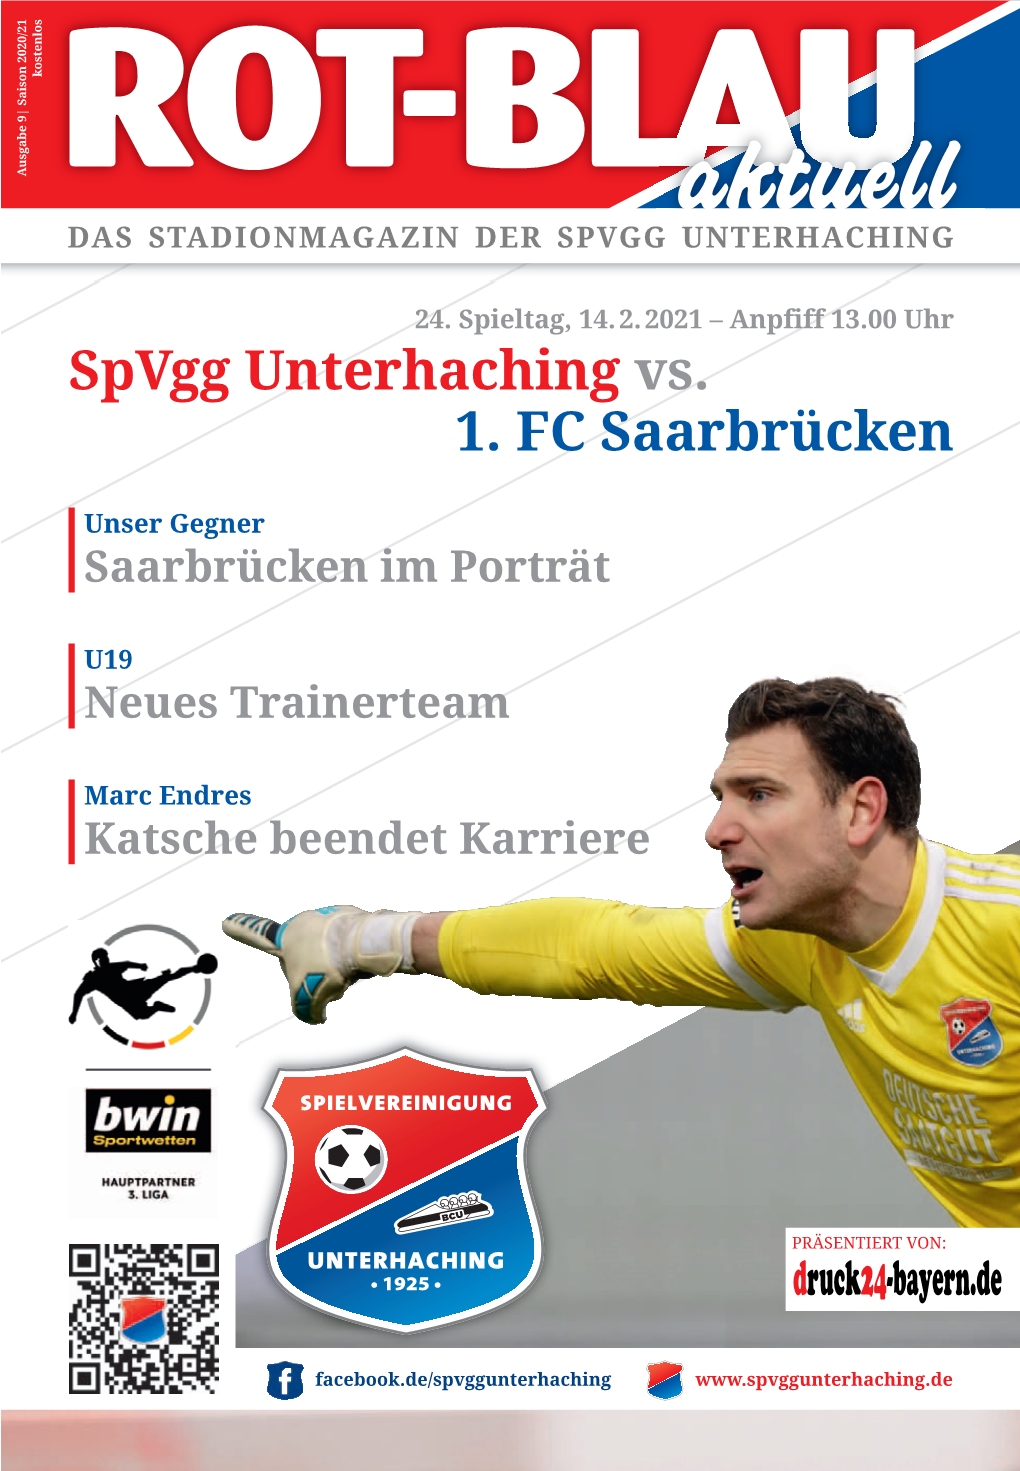 Spvgg Unterhaching Stadionmagazin 2020/2021 Nr. 9.Qxp